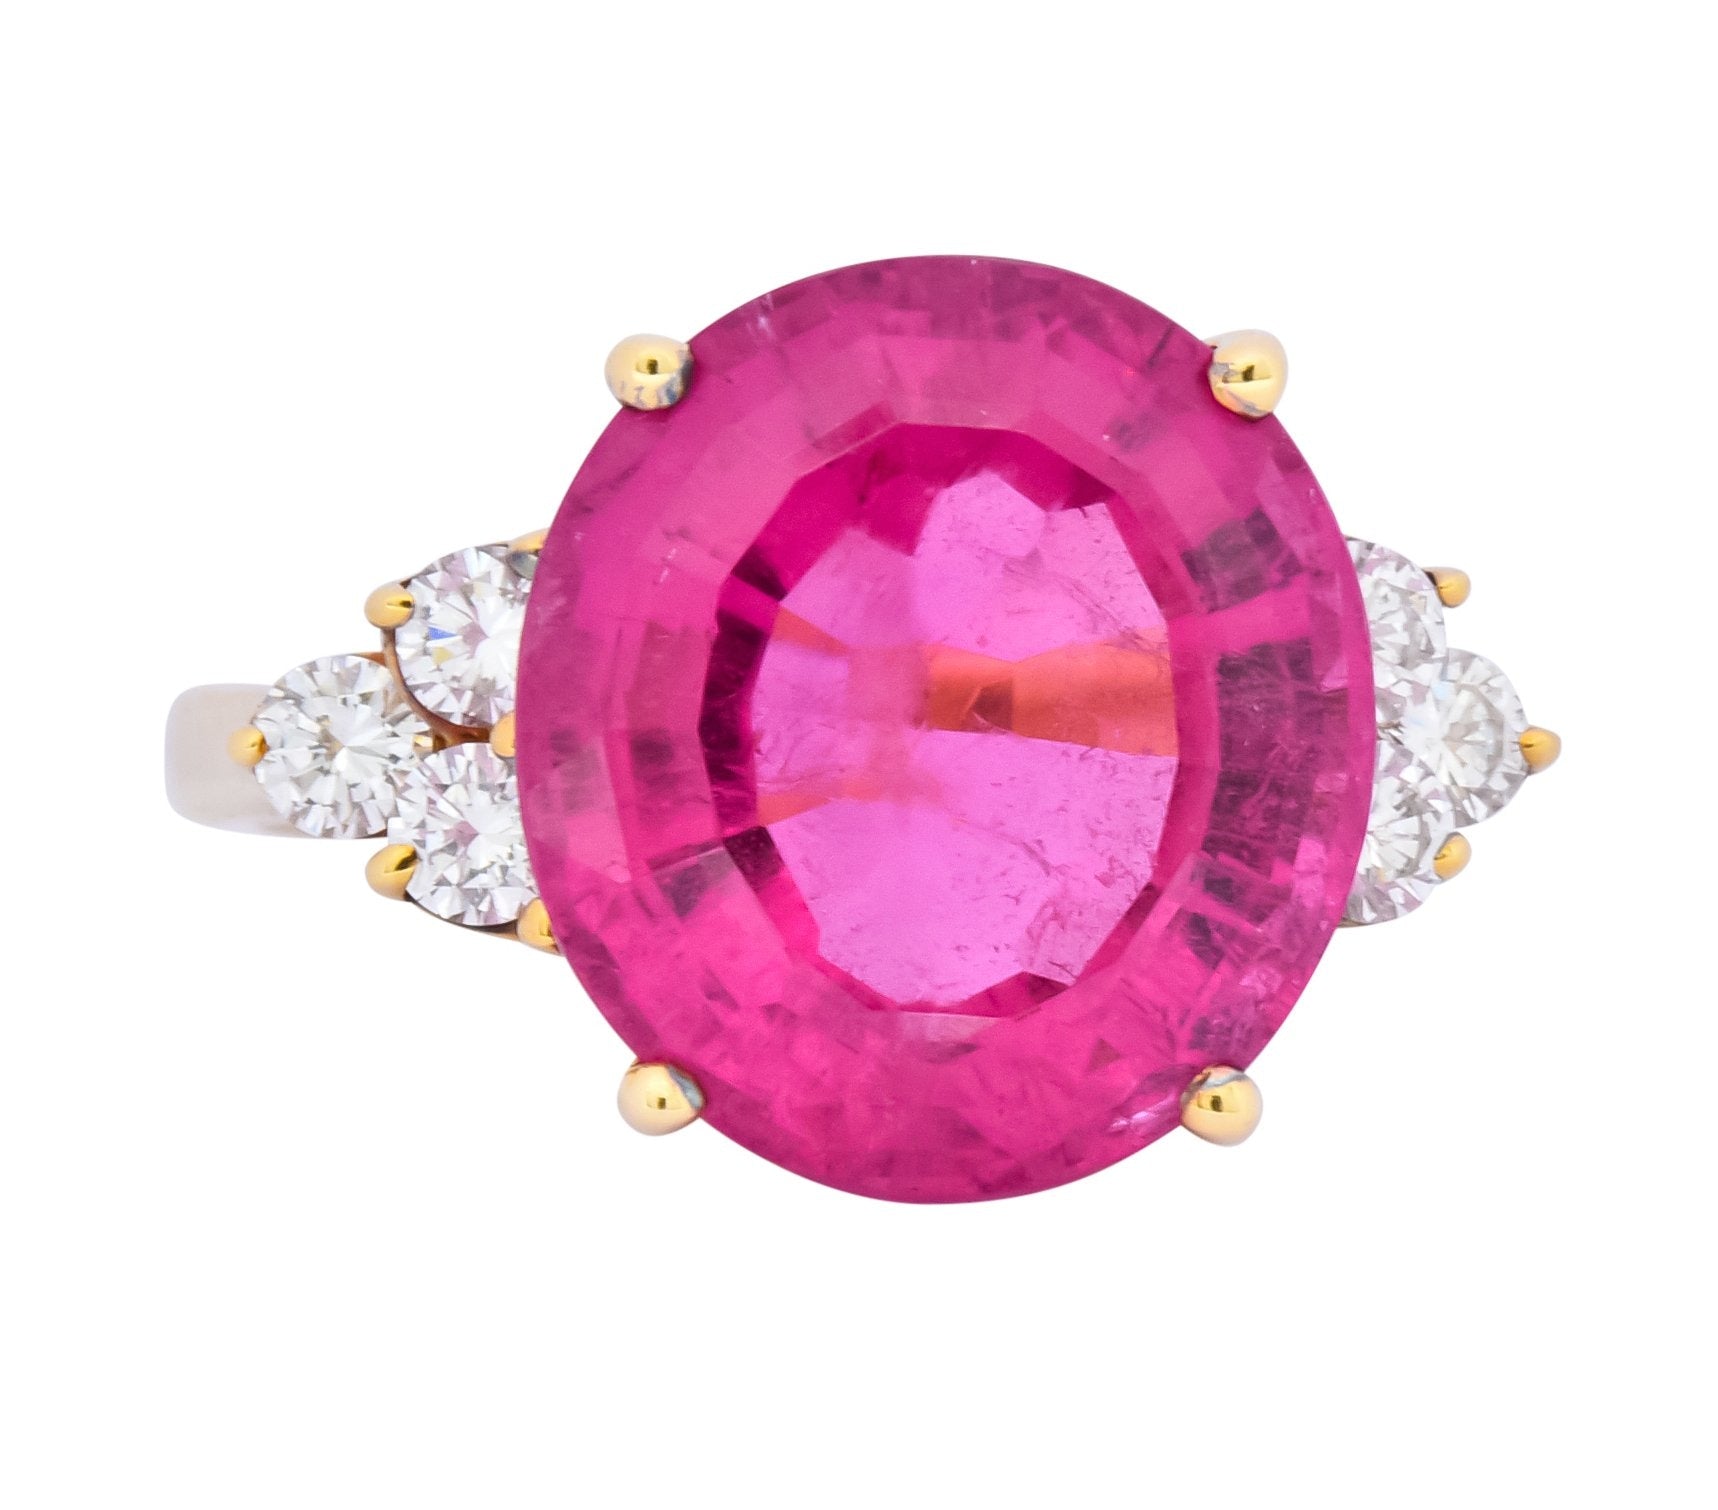 Pin by QueenCiara on Colored Diamonds  Pink jewelry, Tiffany jewelry,  Beautiful jewelry